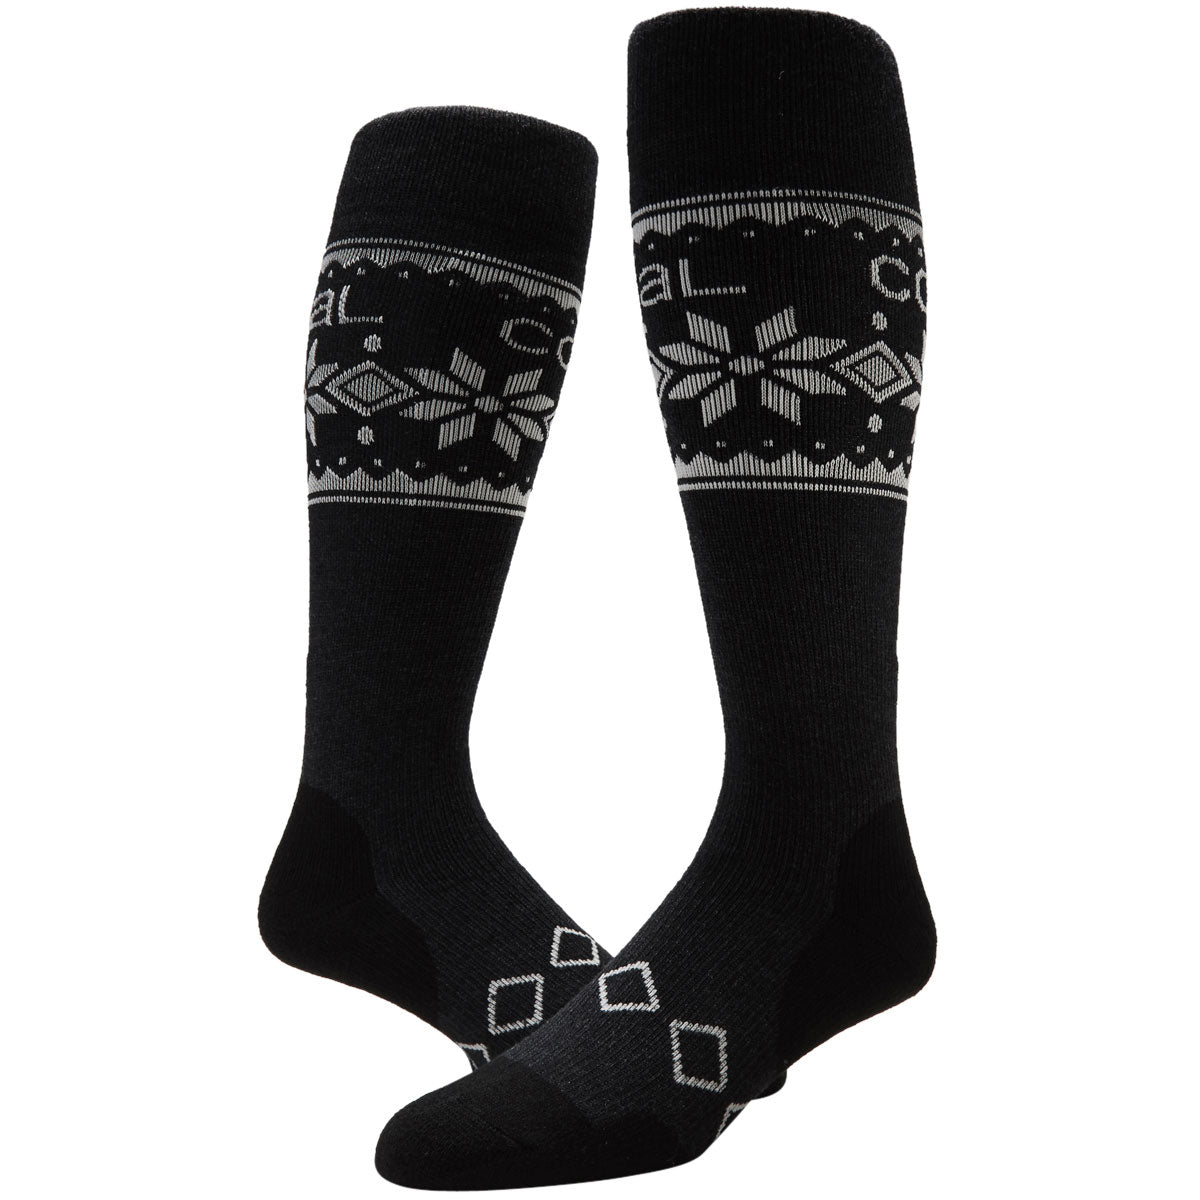 Coal Midweight Snowboard Socks - Black image 2